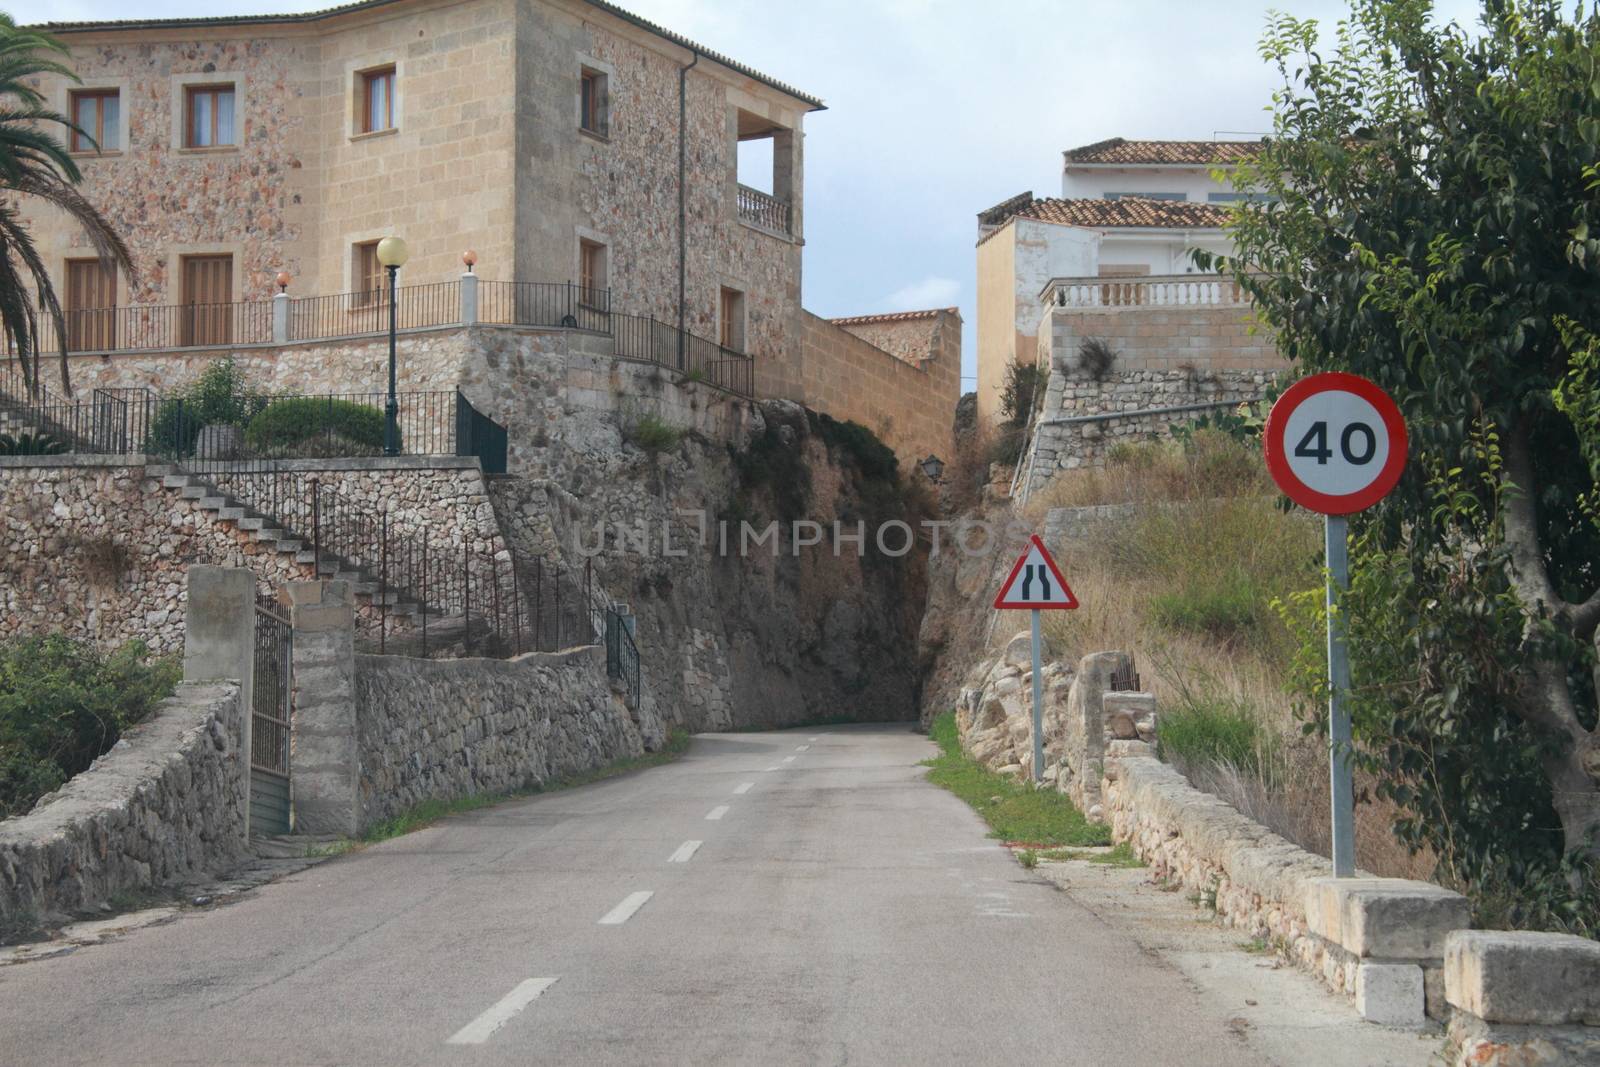 Entrance into Muro Mallorca Spain by mitzy